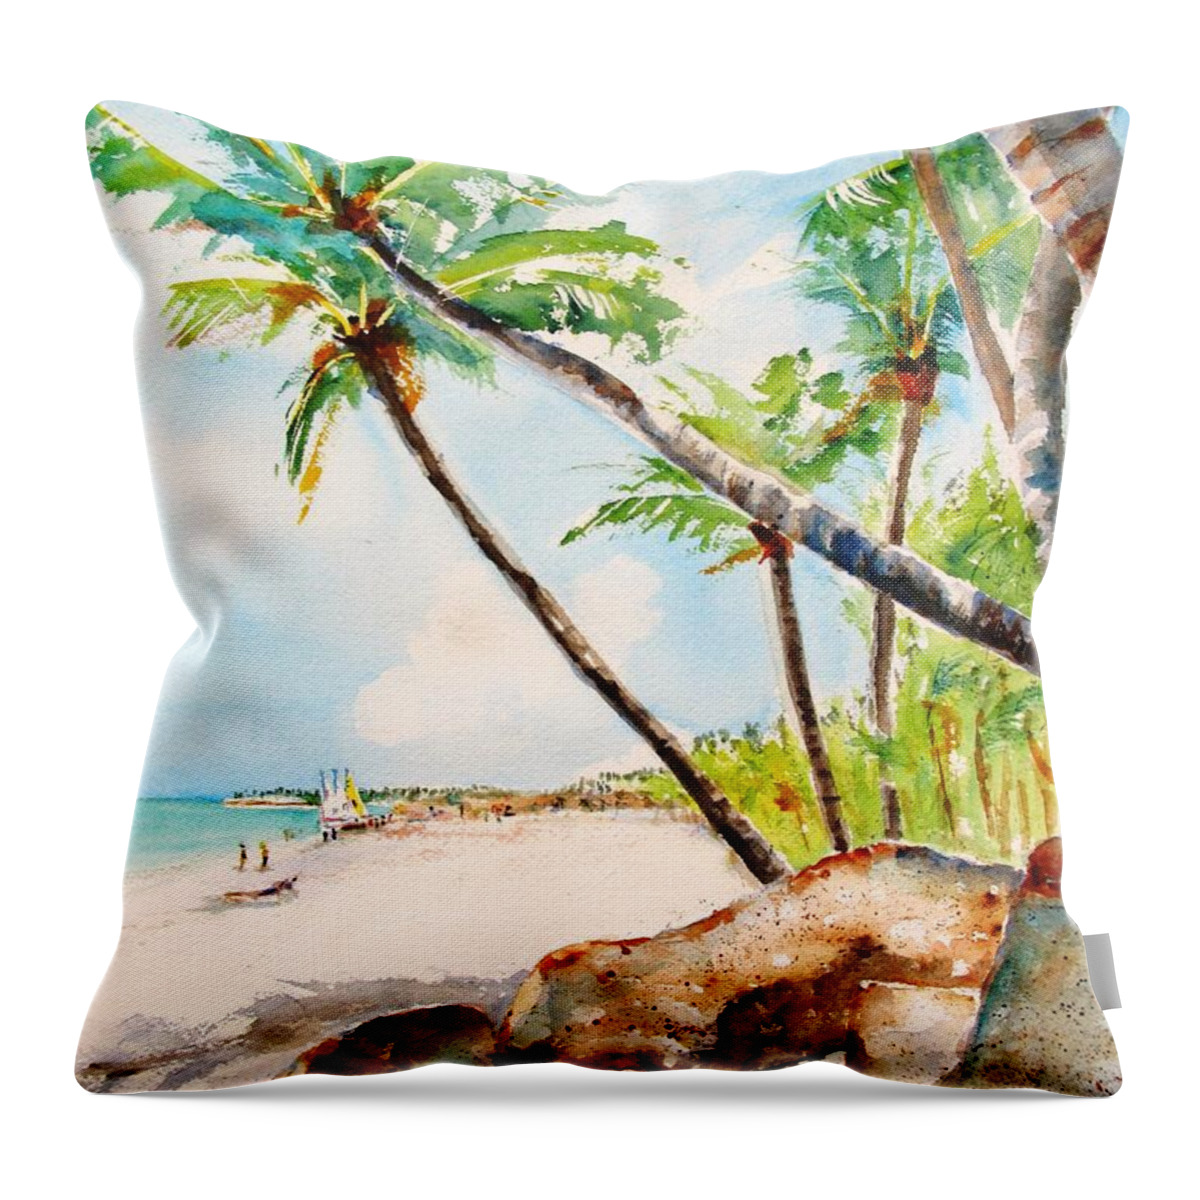 Tropical Beach Throw Pillow featuring the painting Bavaro Tropical Sandy Beach by Carlin Blahnik CarlinArtWatercolor